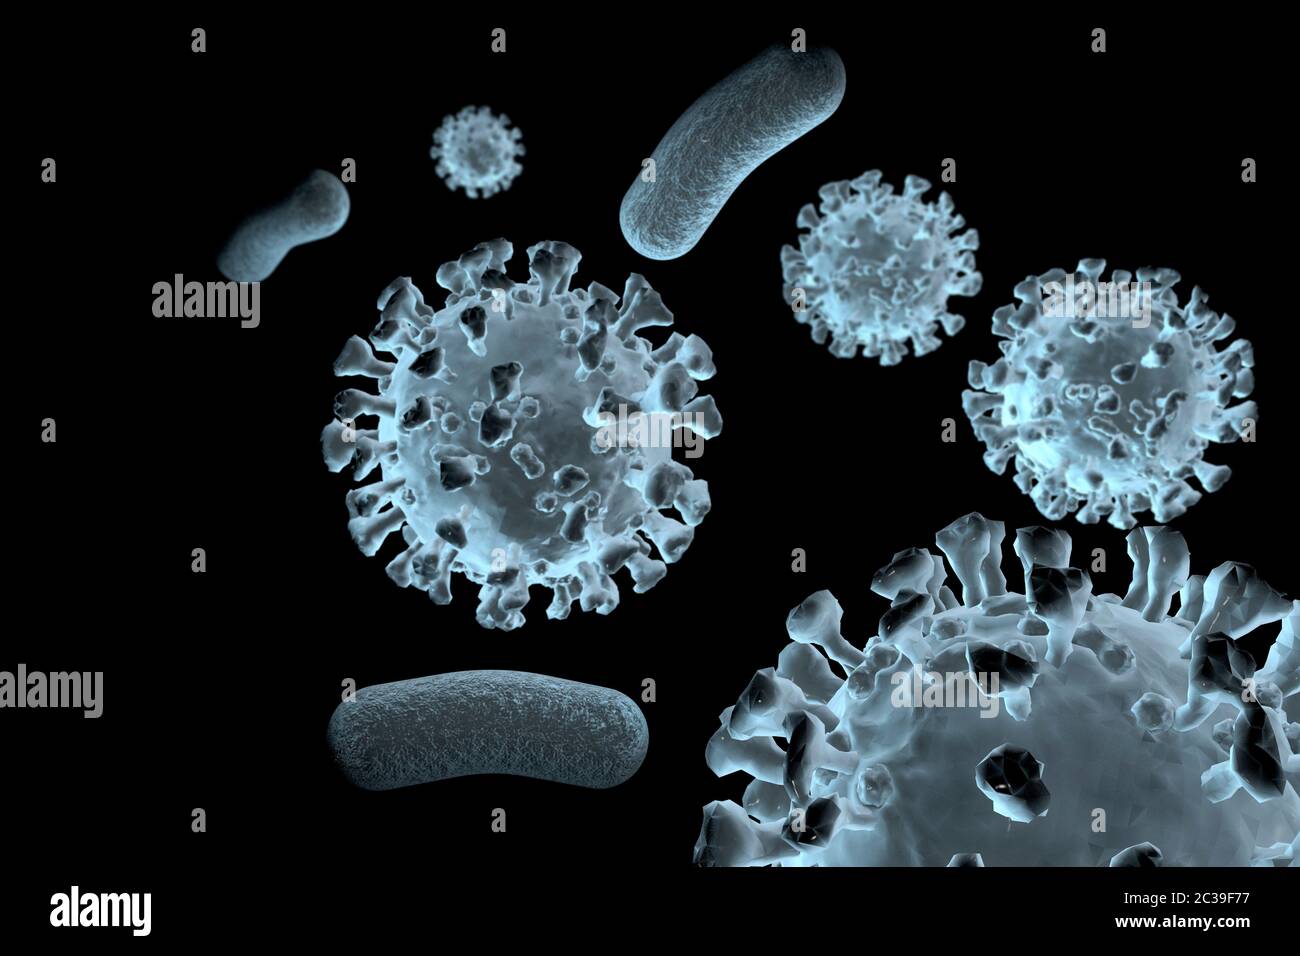 ein fieses Virus befaellt die Welt - Symbolbild: CGI-Visualizierung: Coronavirus Covid 19, SARS 2, andere Virenund Bakterien/ un nuovo virus orribile inf Foto Stock